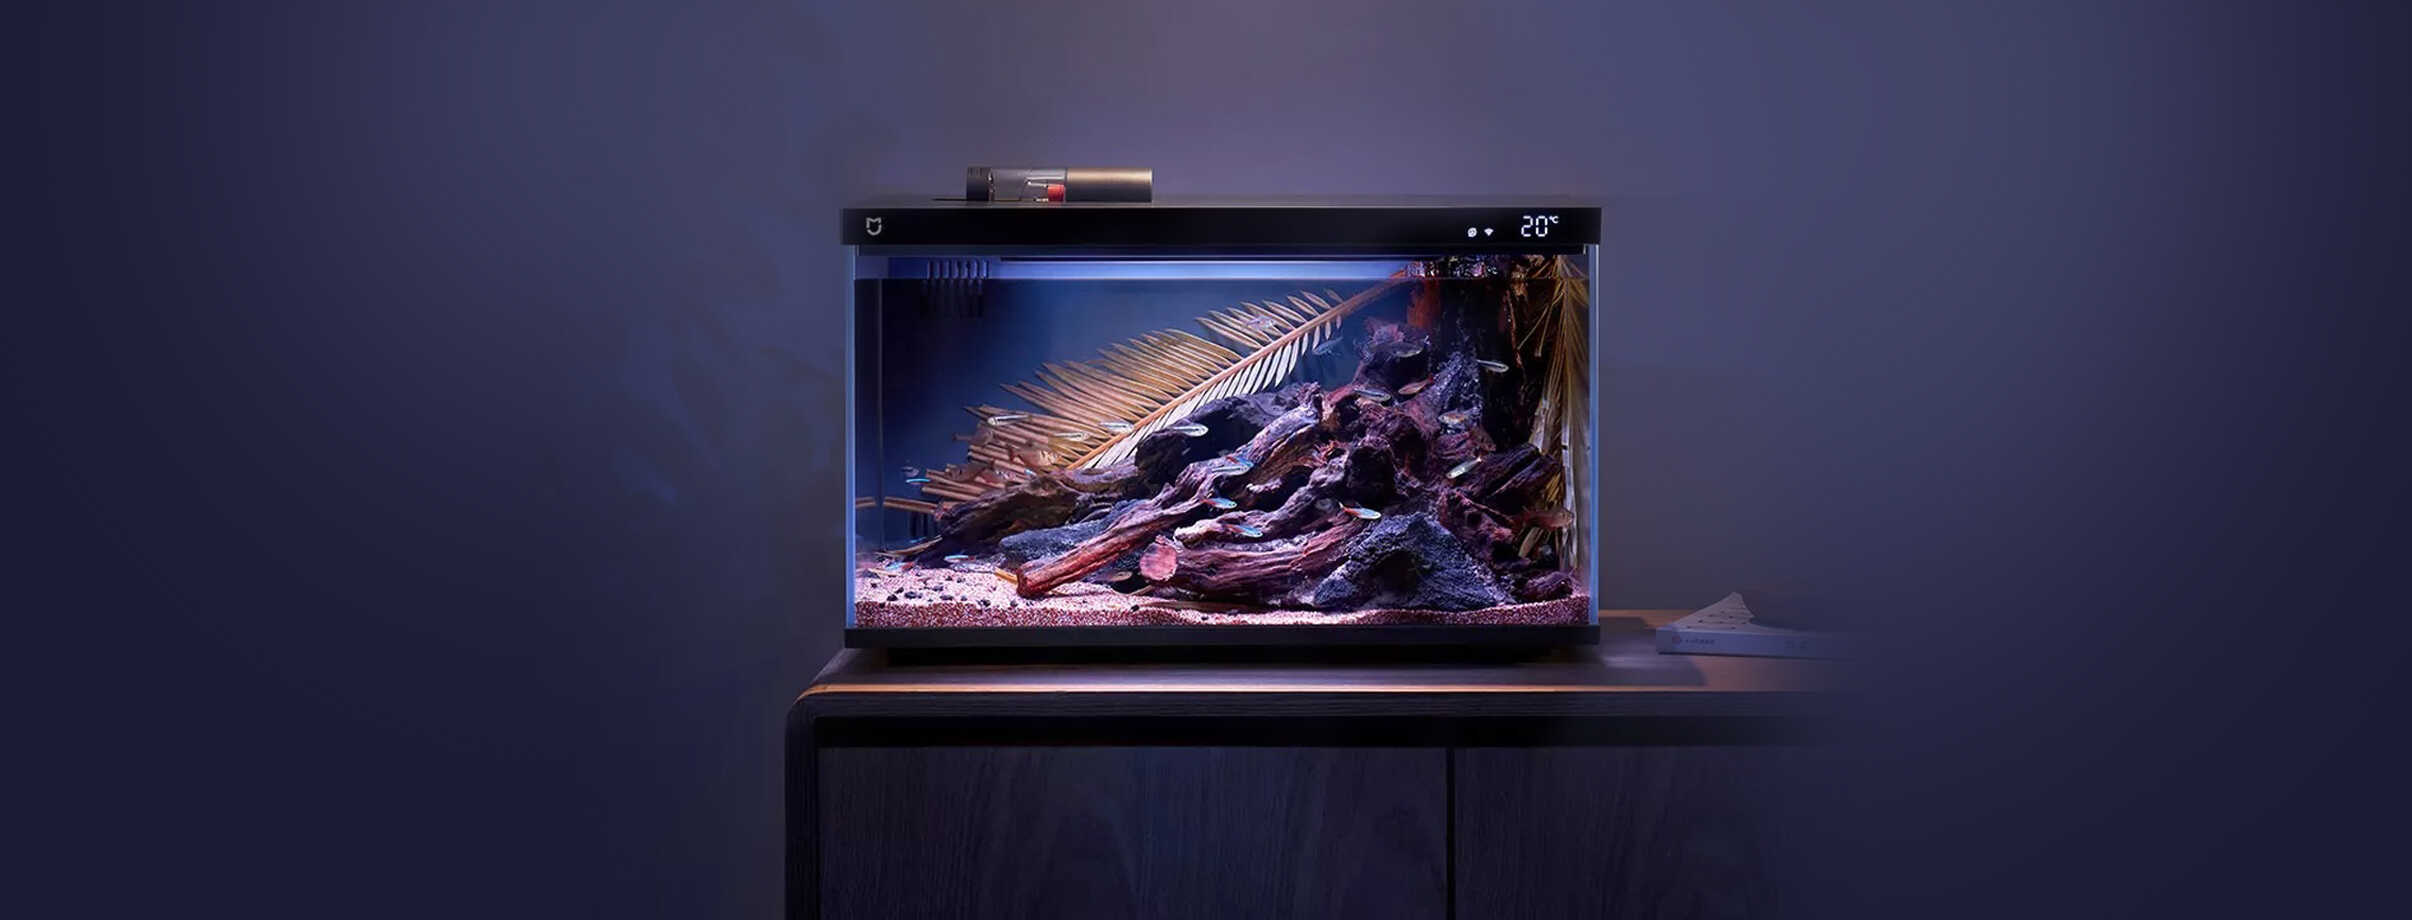 🐠 Как выглядит мечта аквариумиста? Как MiJia Smart Fish Tank